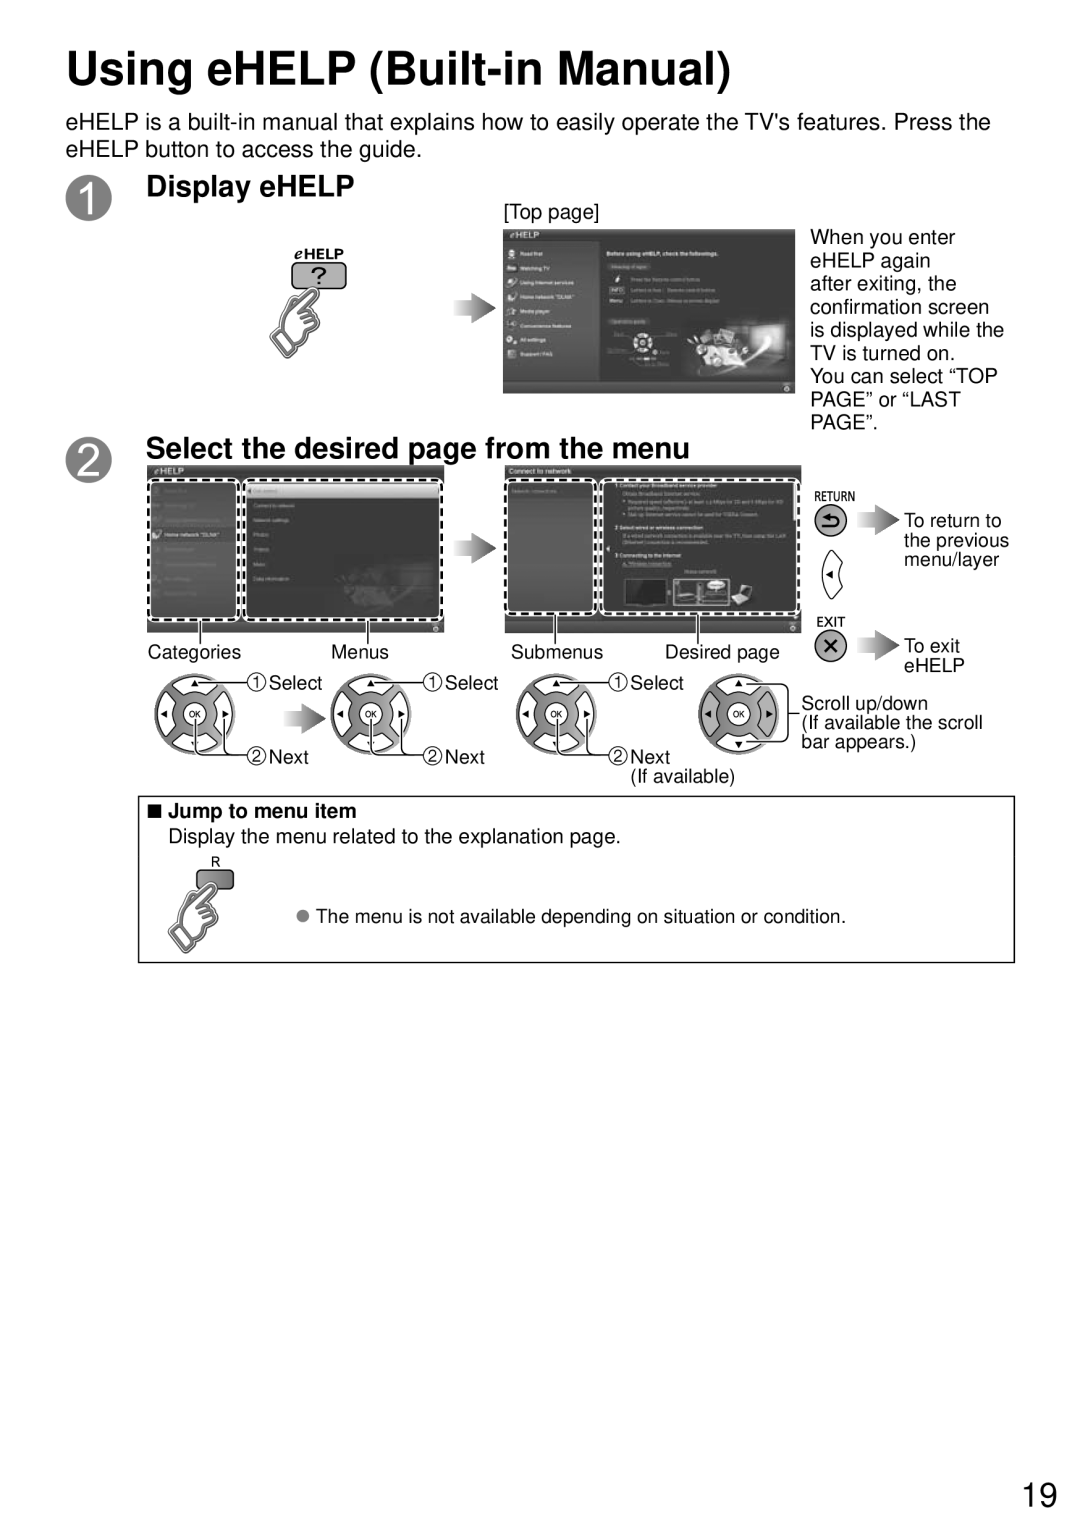 Panasonic TC-65PS64 Using eHELP Built-in Manual, Display eHELP, Select the desired page from the menu, Jump to menu item 